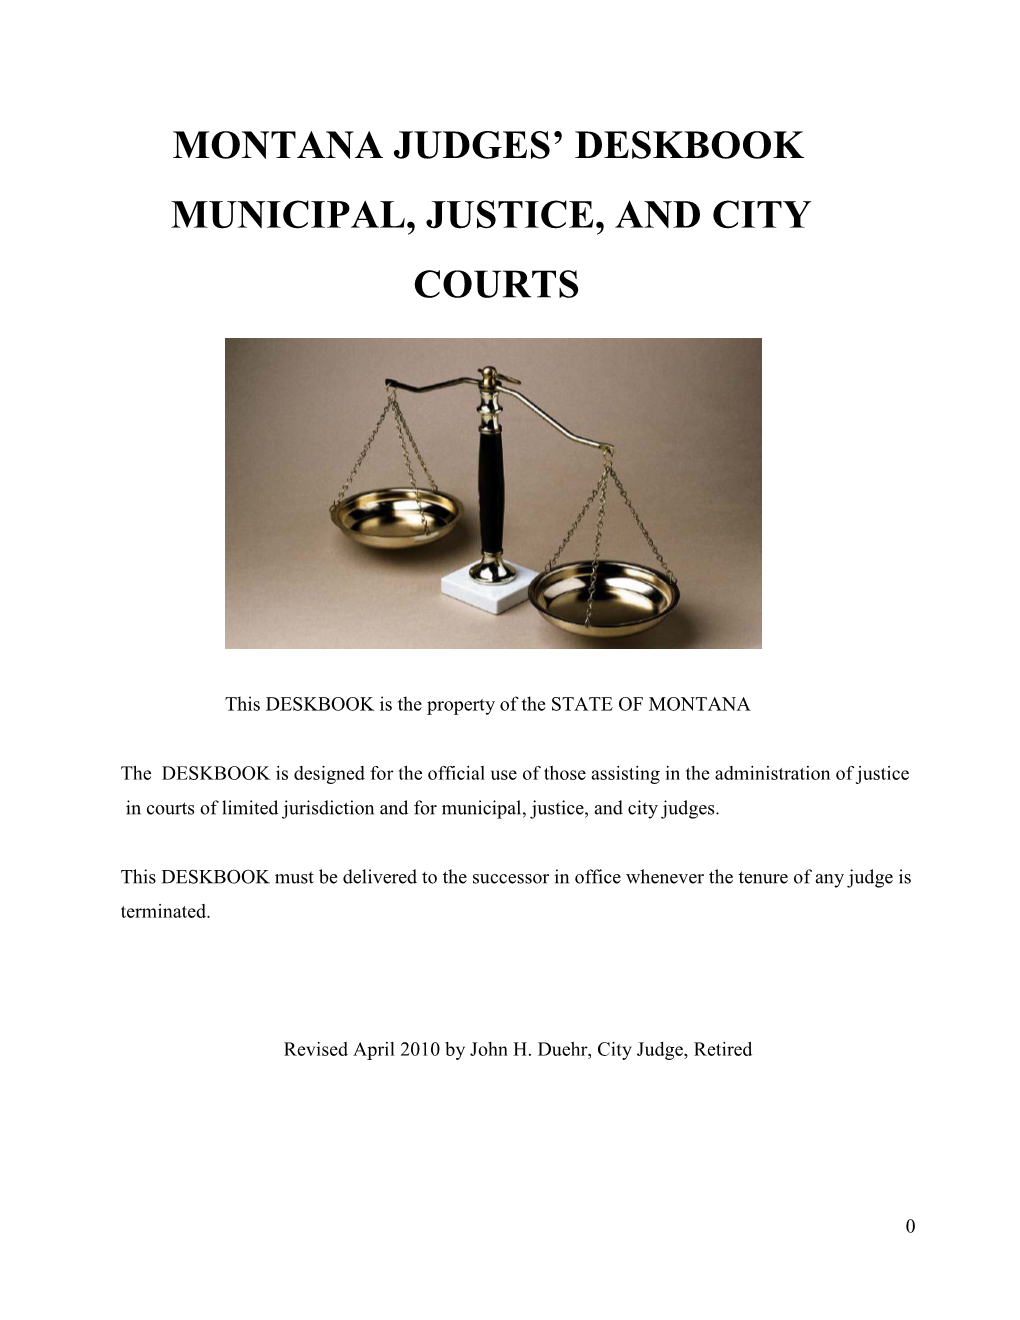 Montana Judges' Deskbook Municipal, Justice, and City